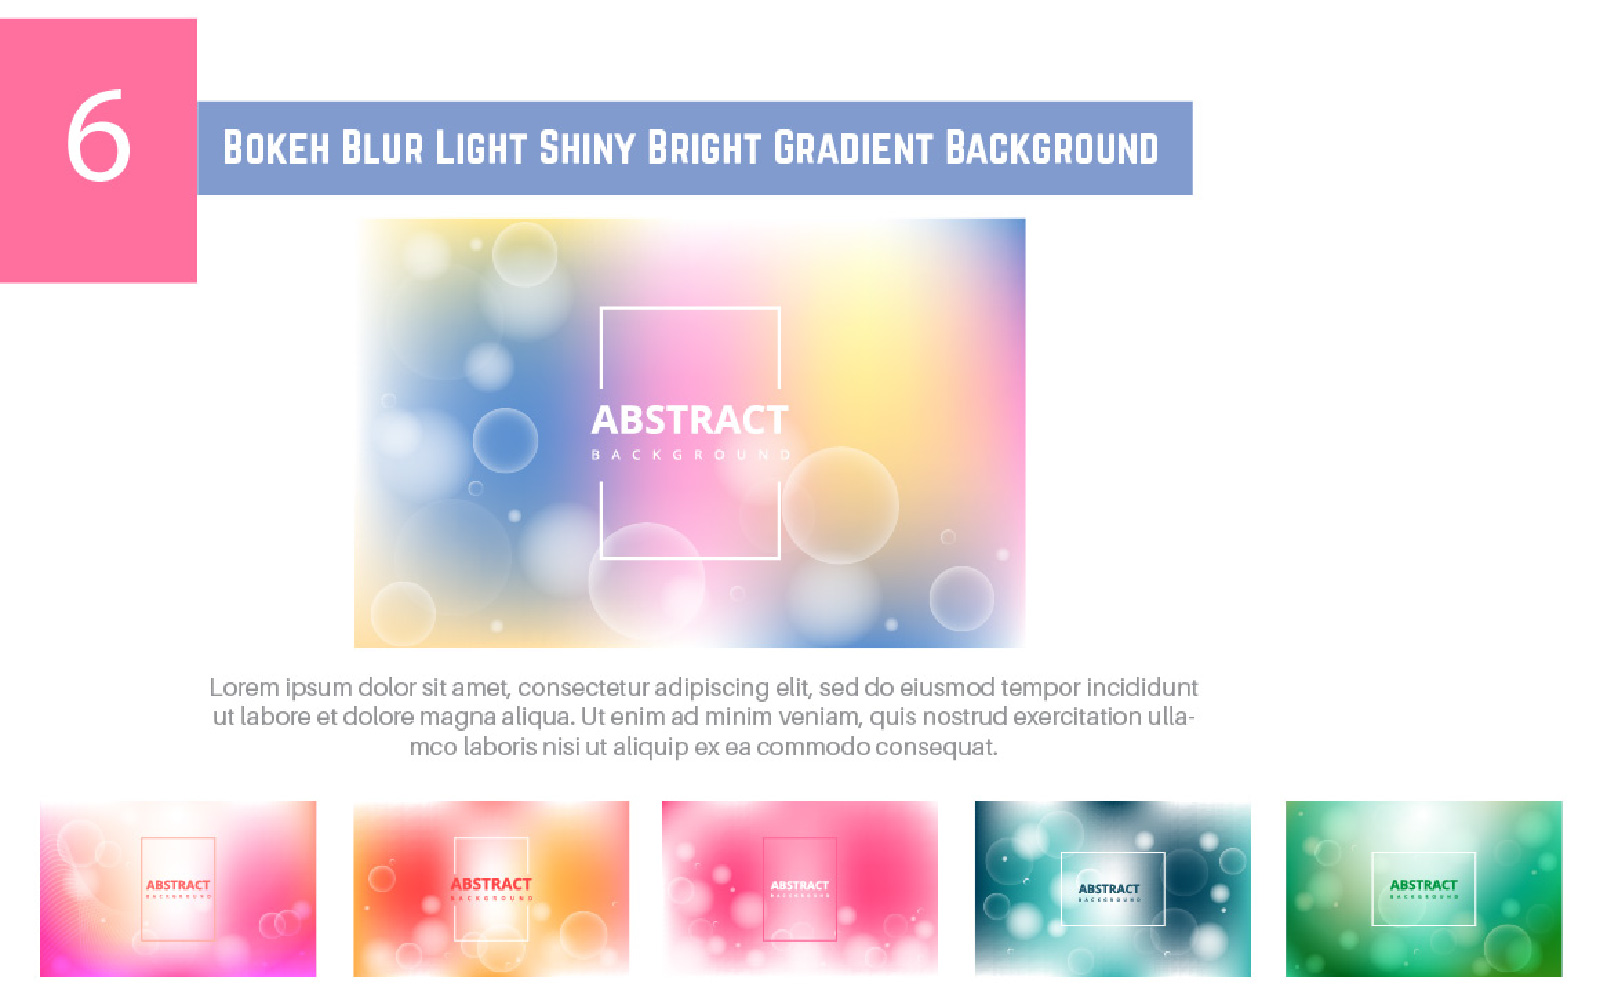 6 Bokeh Blur Light Shiny Bright Gradient Background